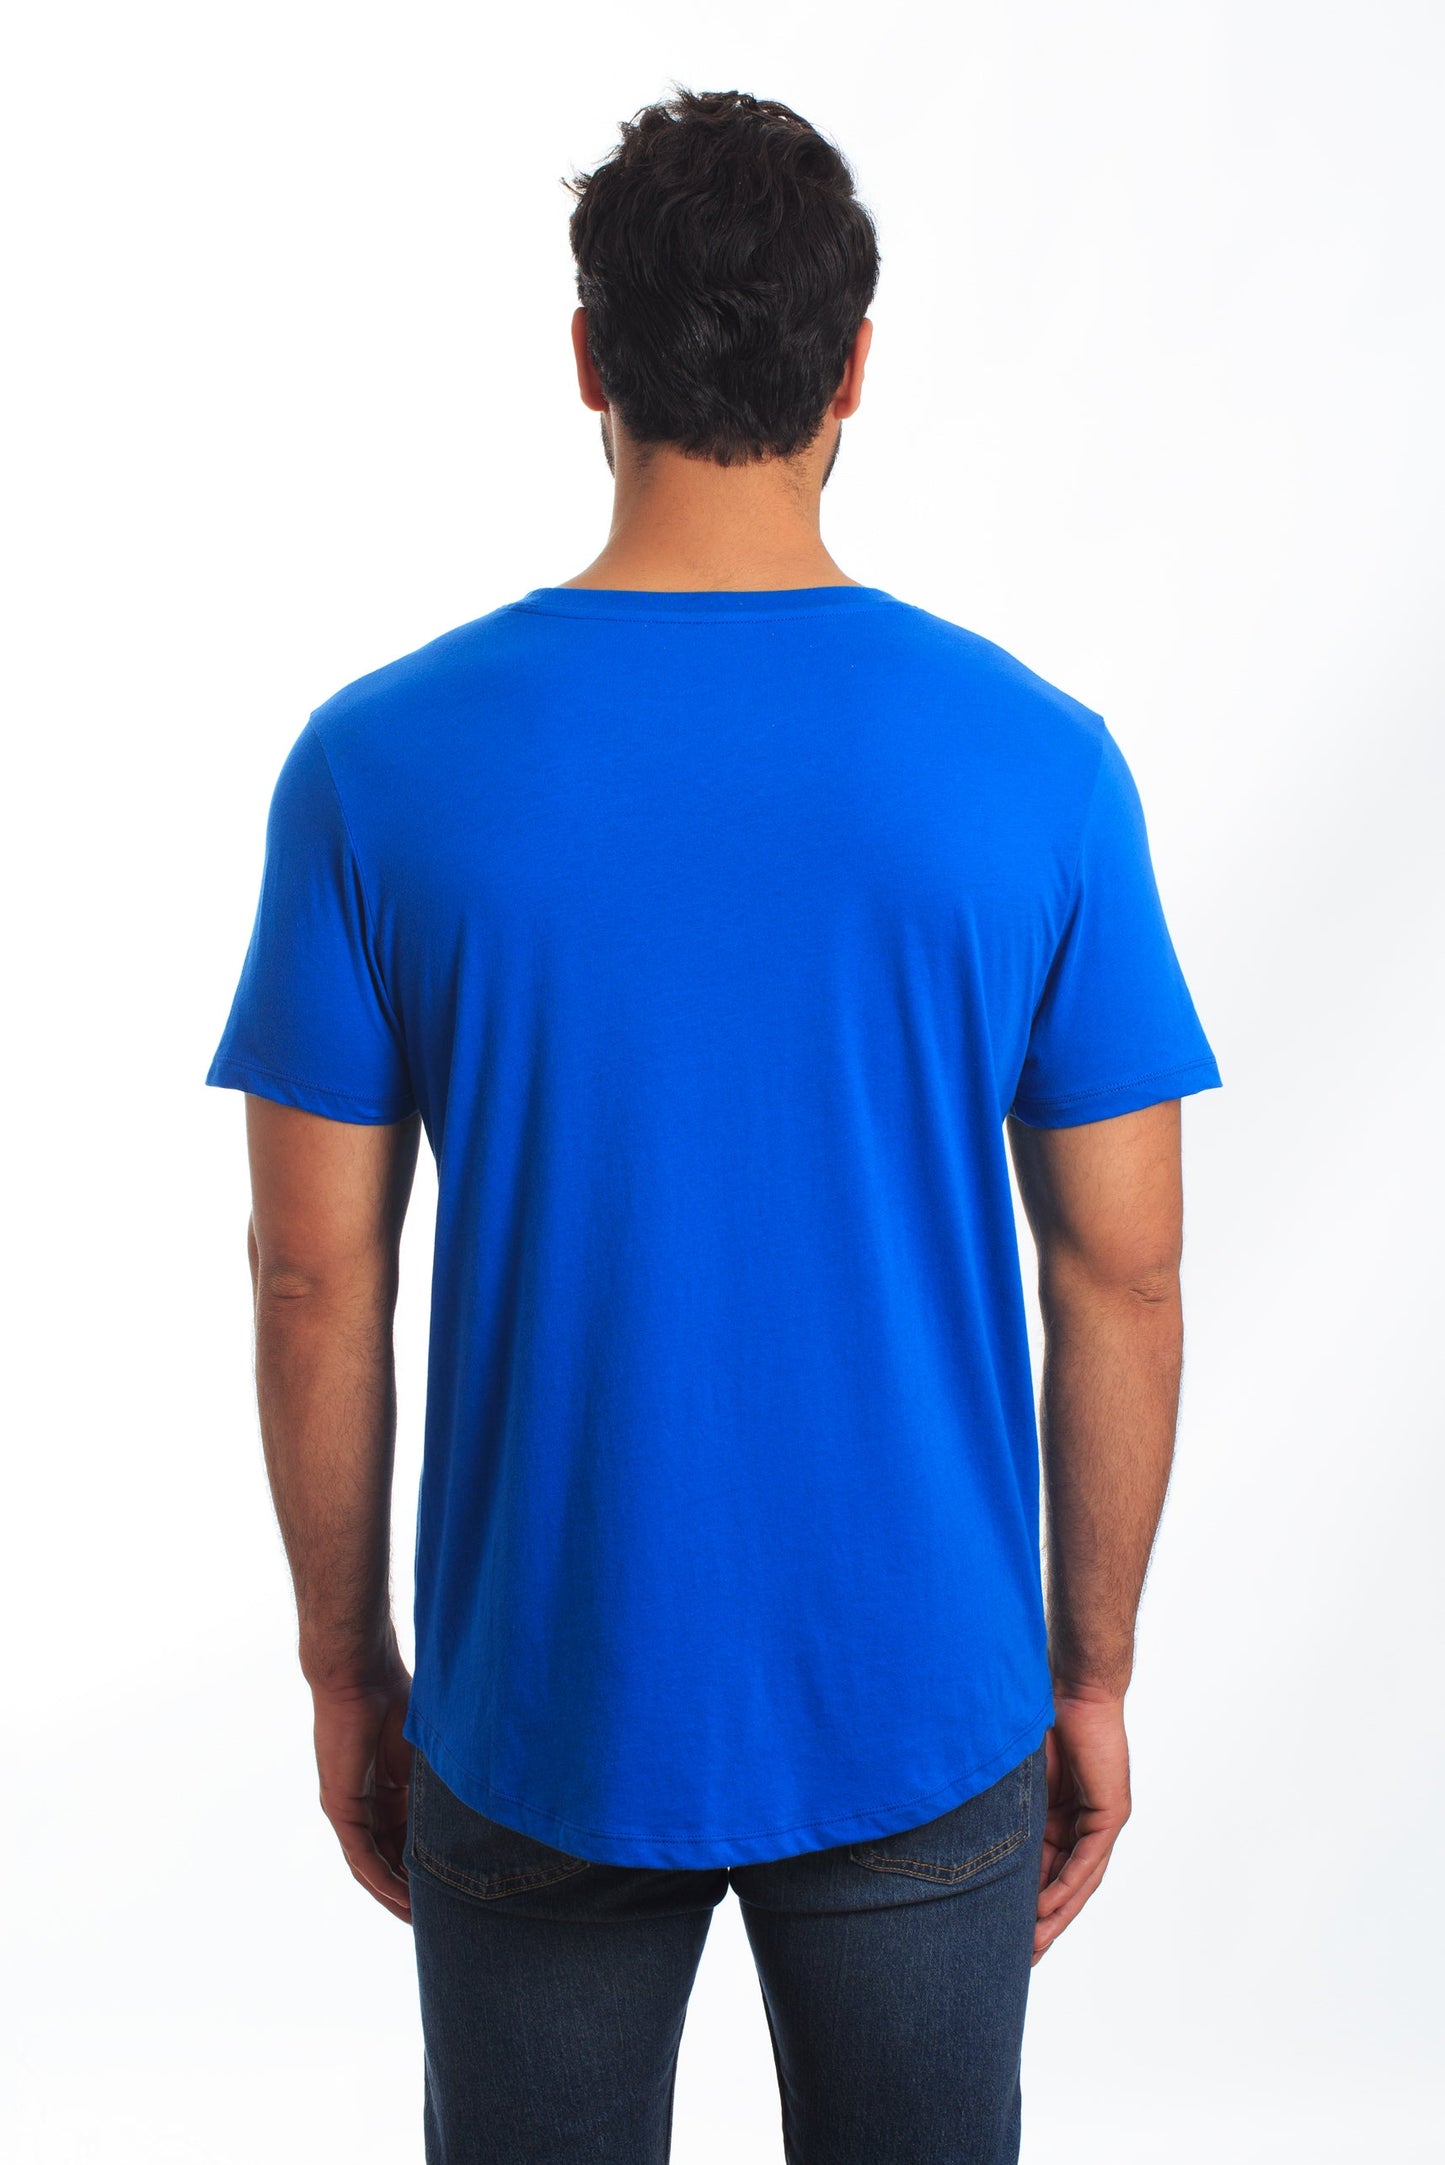 Blue T-Shirt TEE-121 Back